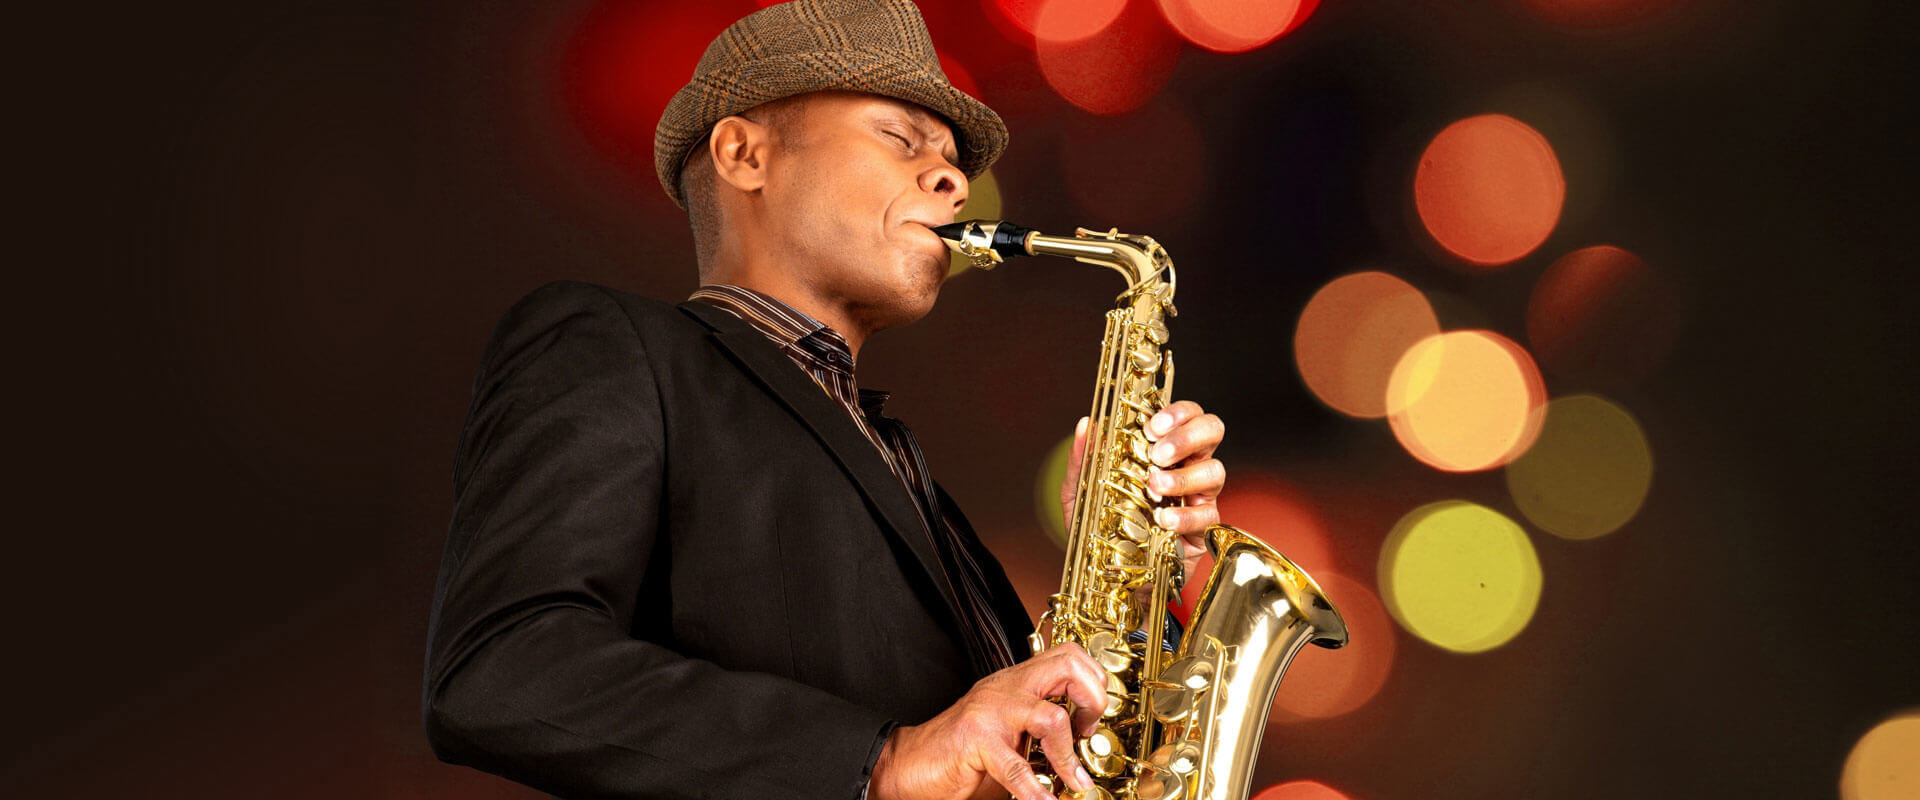 Saxophone Lessons Secane, PA